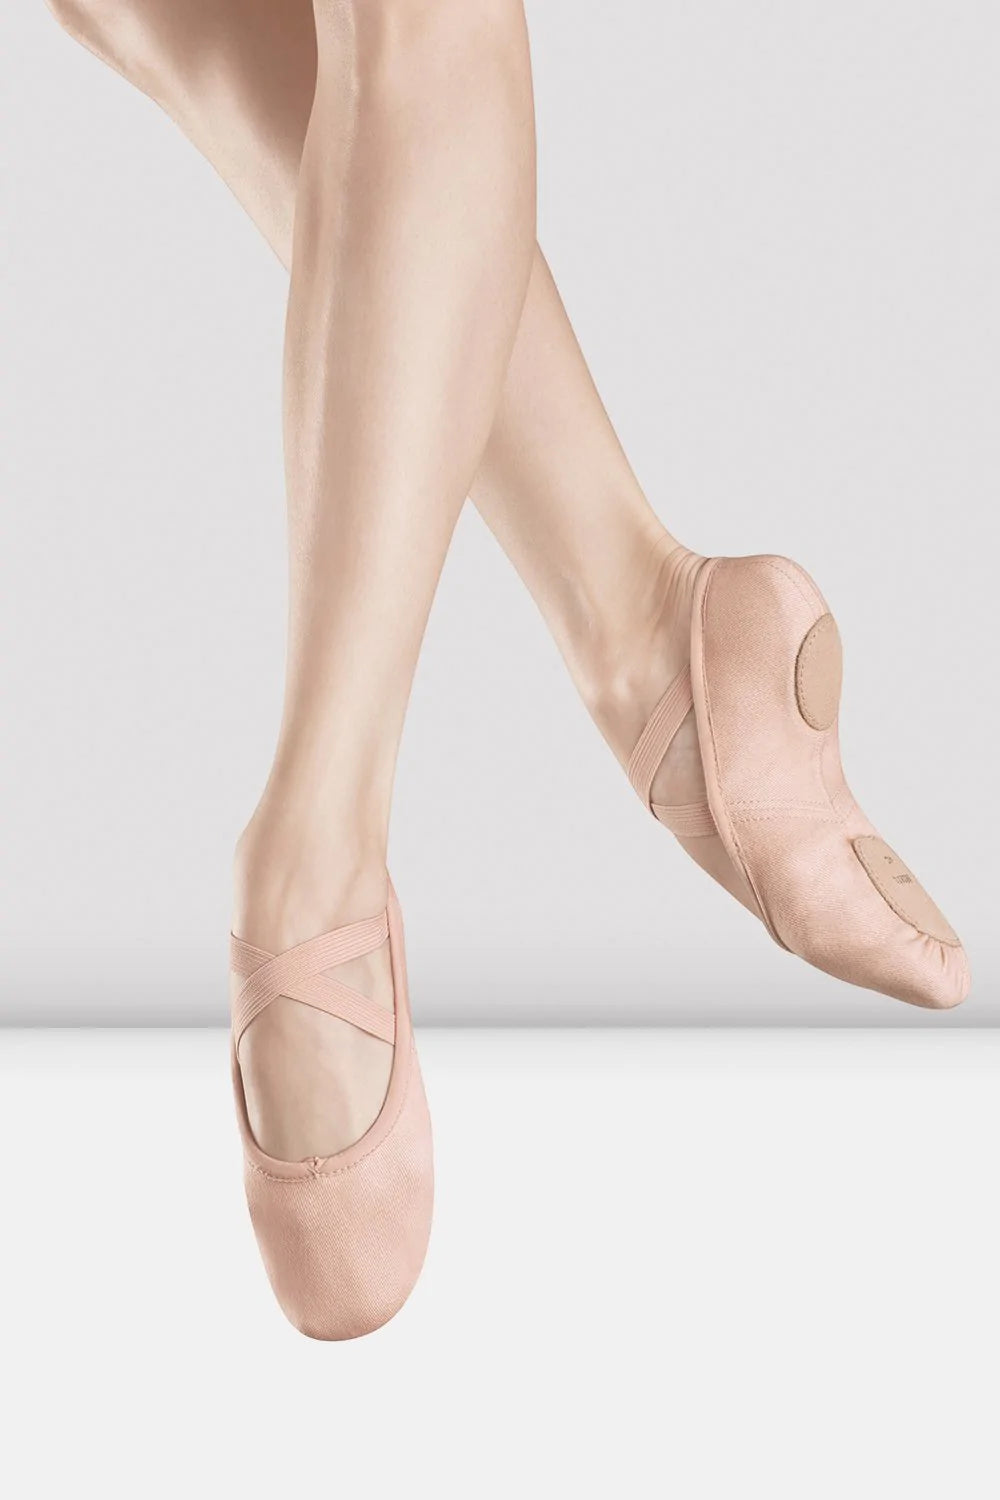 50% OFF Bloch Zenith Canvas Ballet Shoes #282